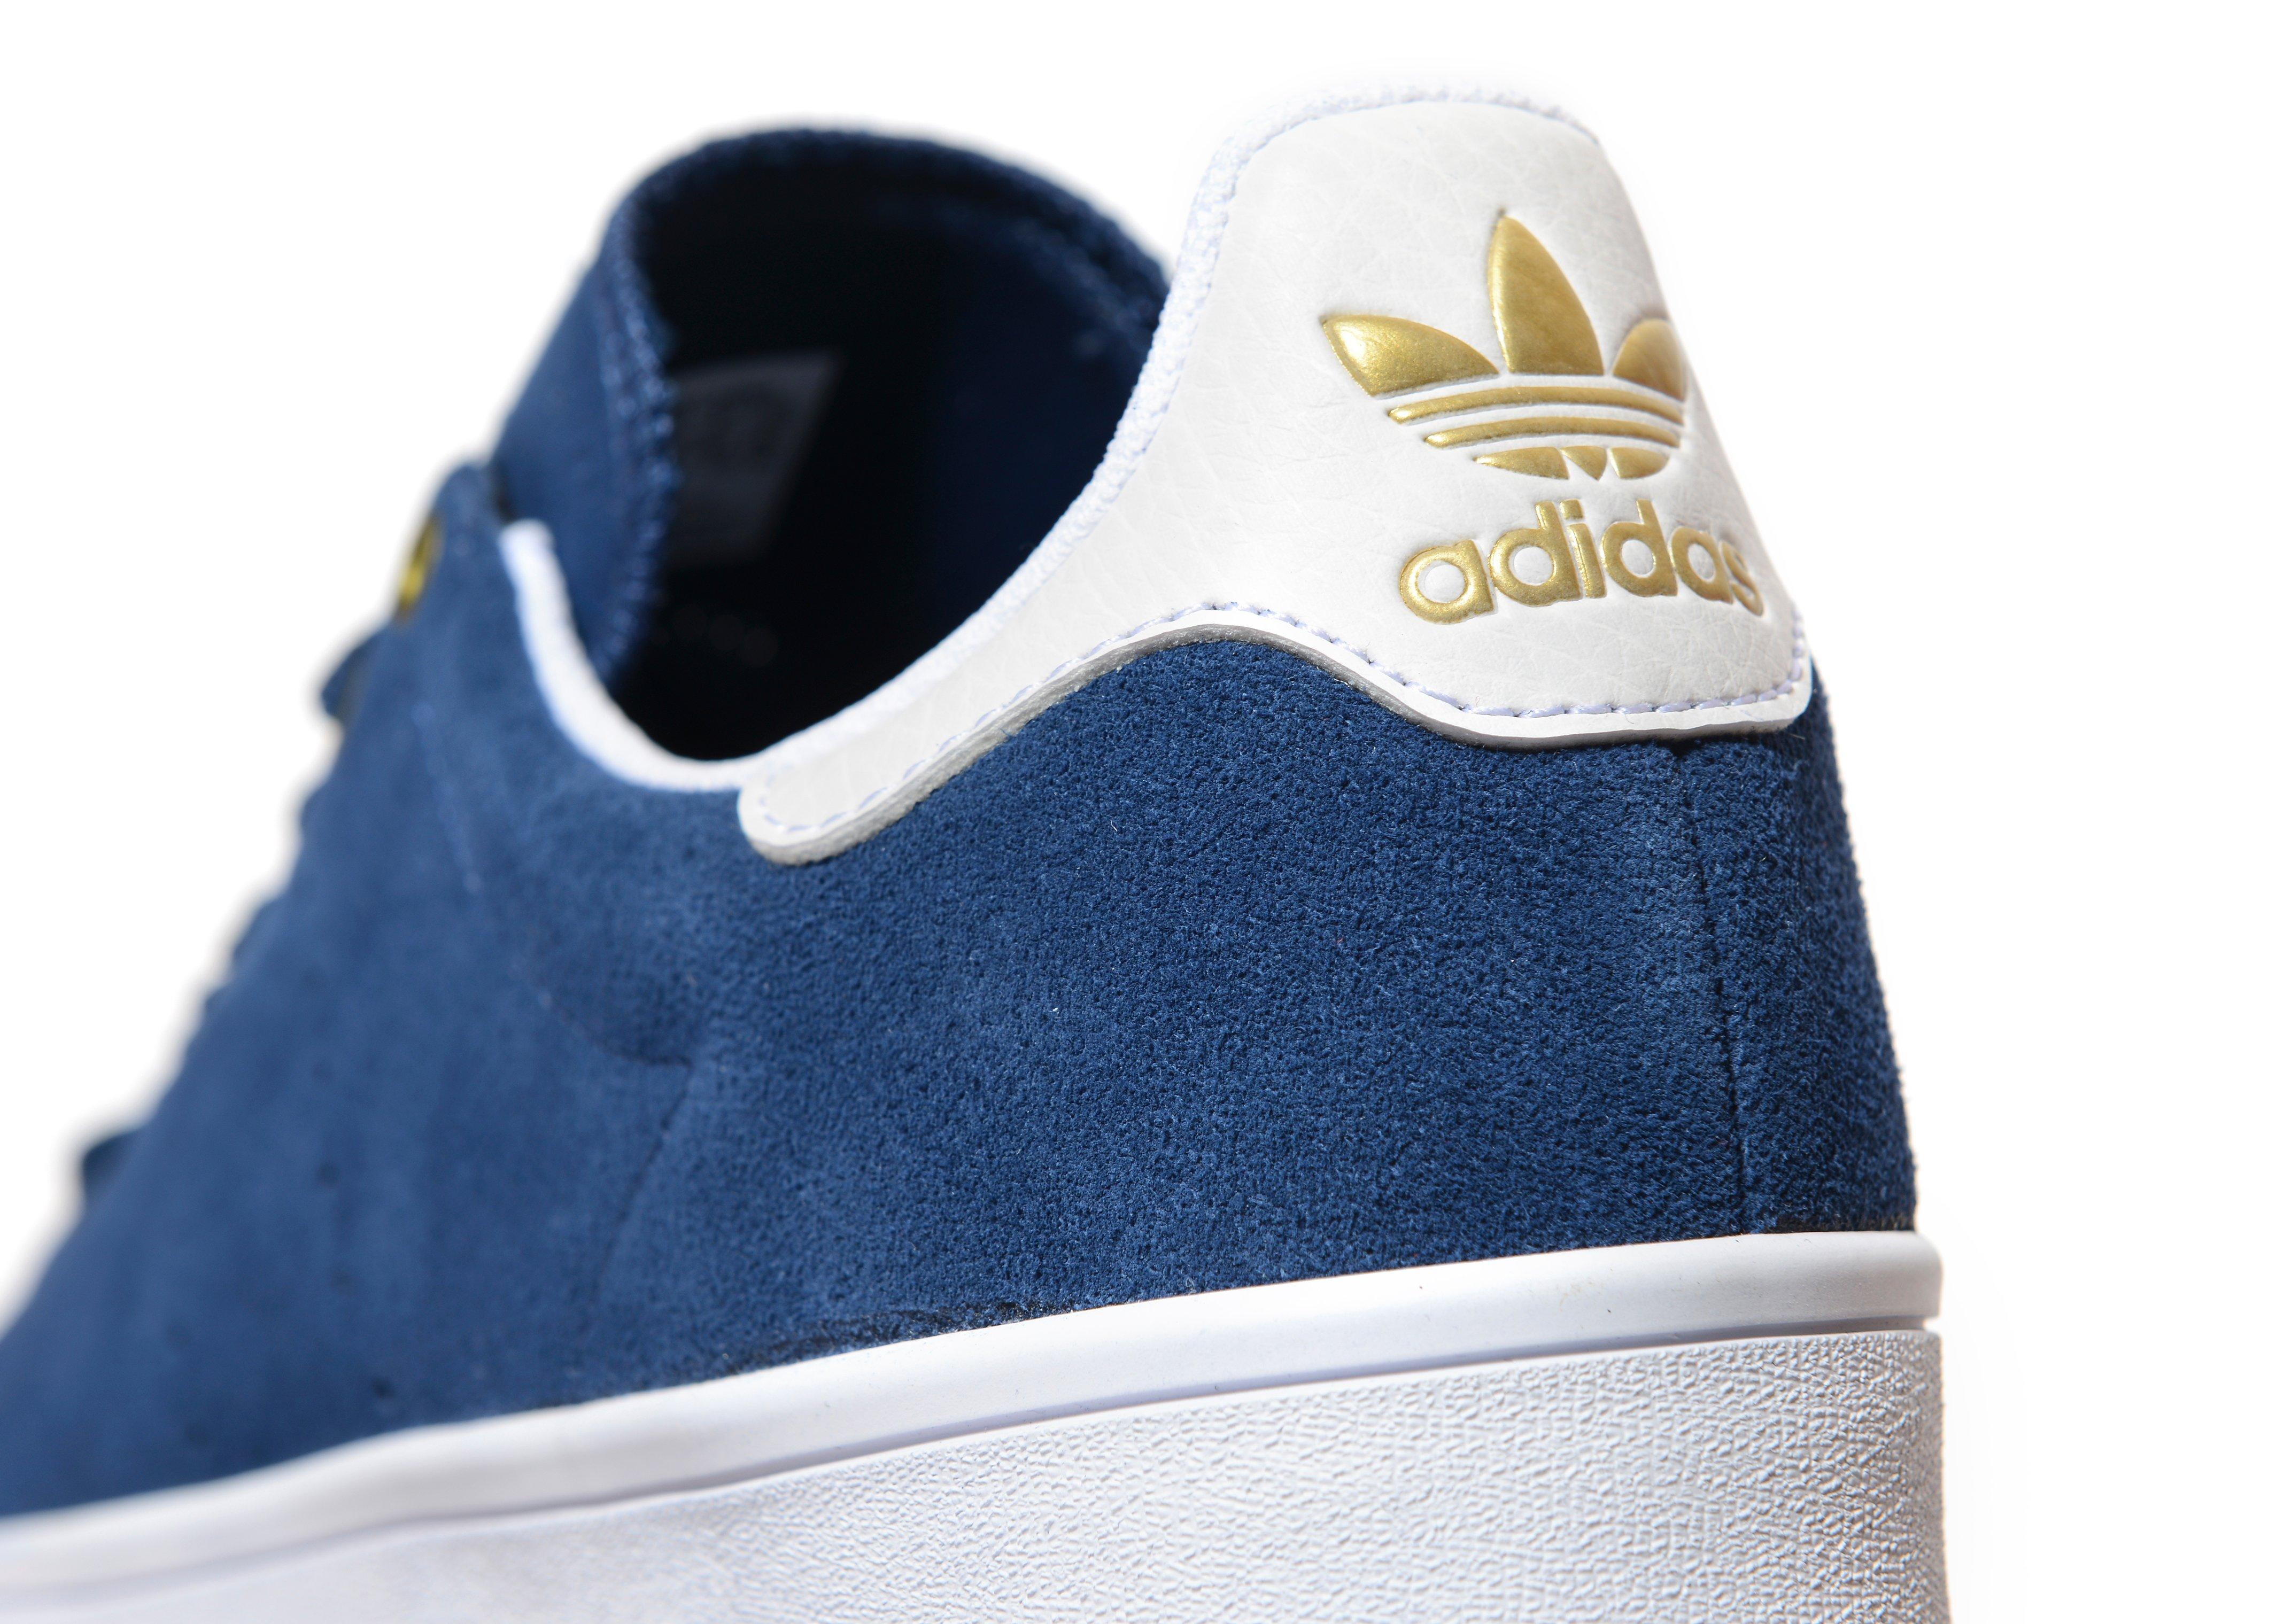 Lyst - Adidas Originals Stan Smith Vulc in Blue for Men